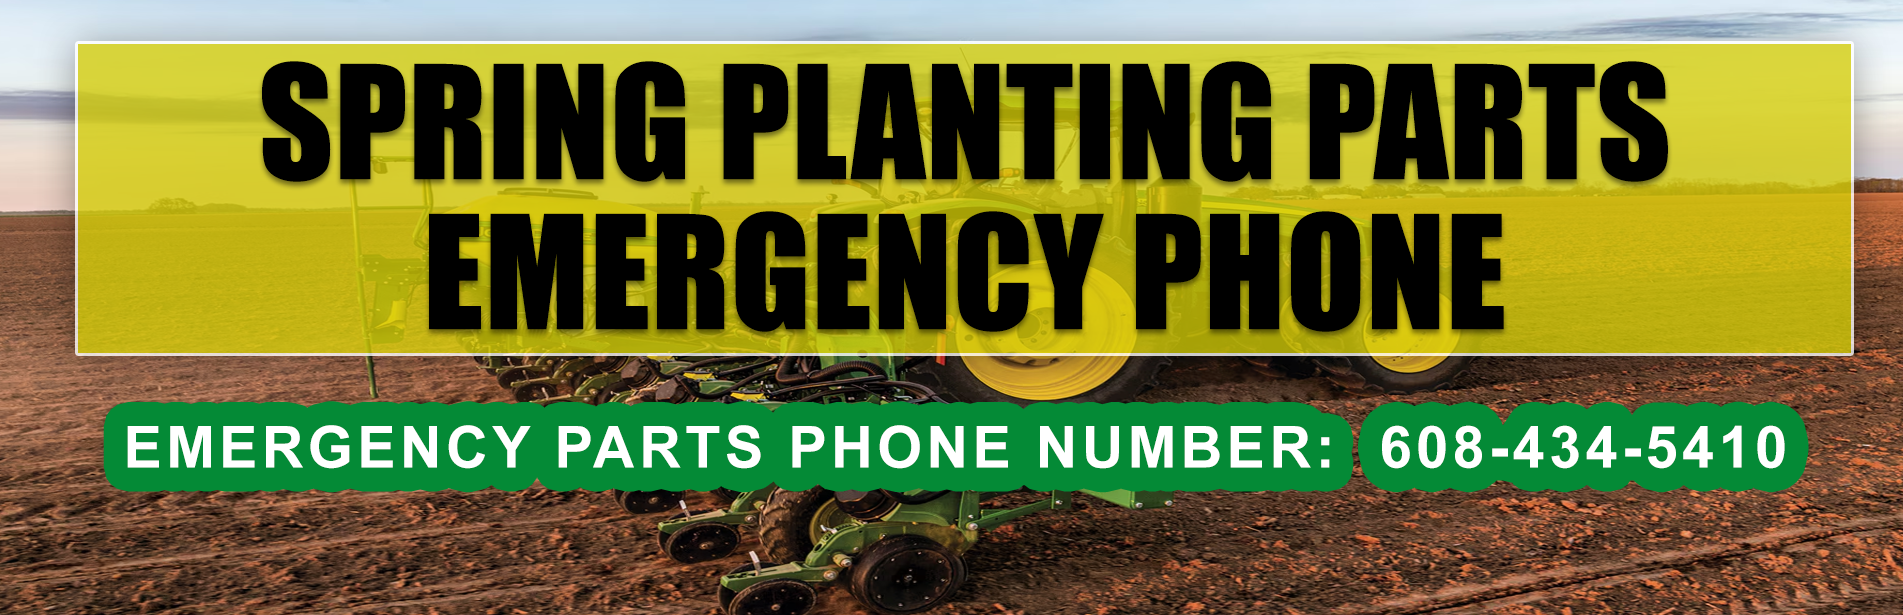 Spring Planting Parts Emergency Phone